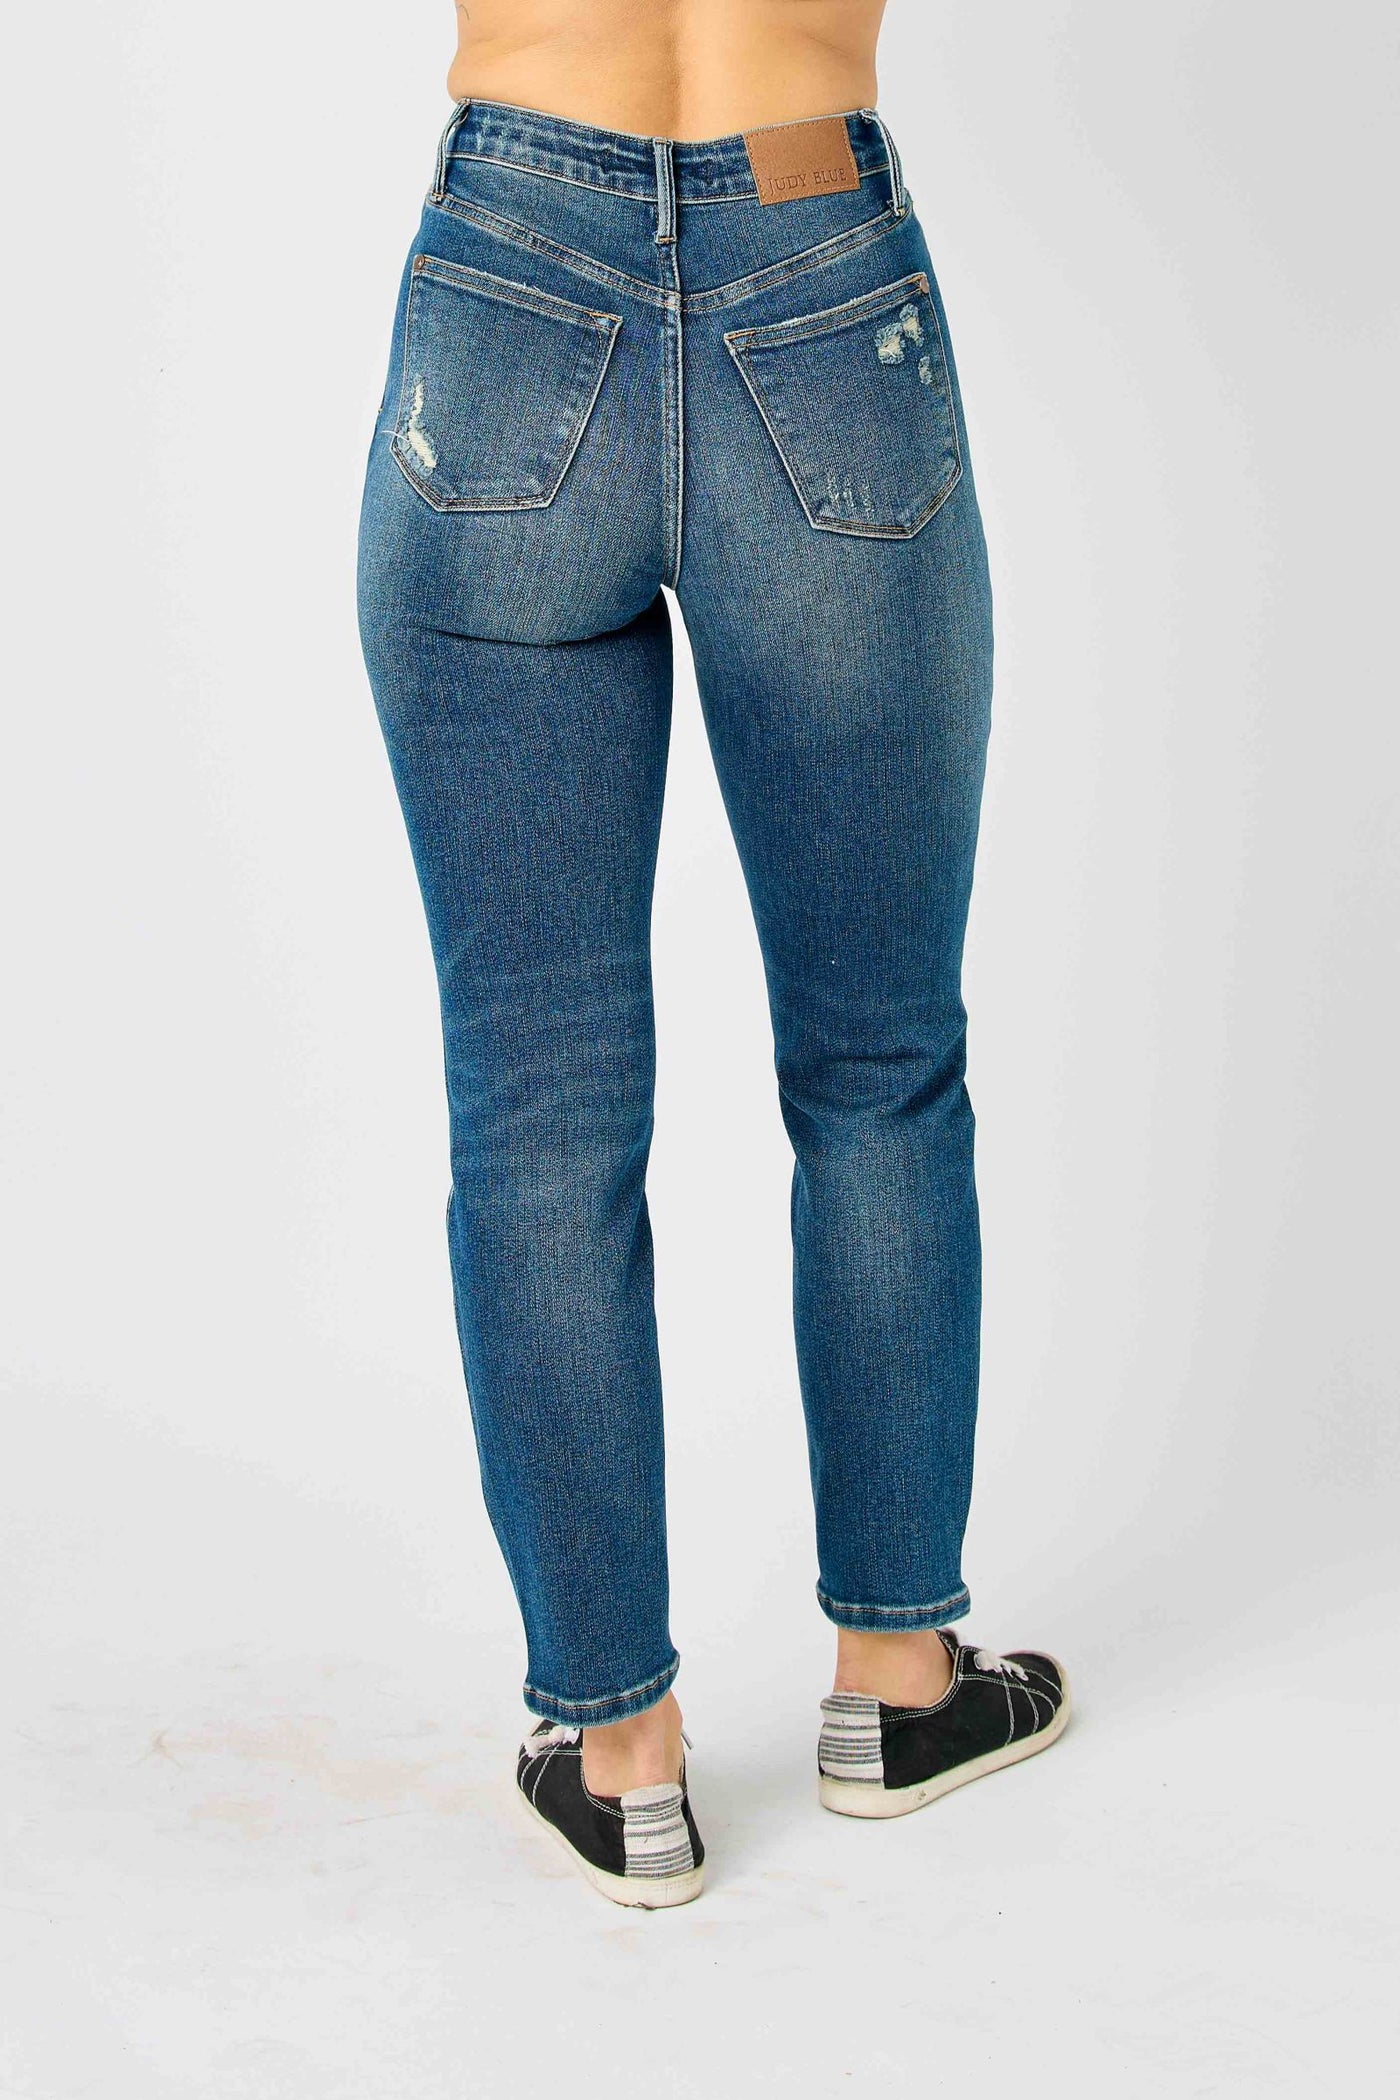 Judy Blue Jeans 88776